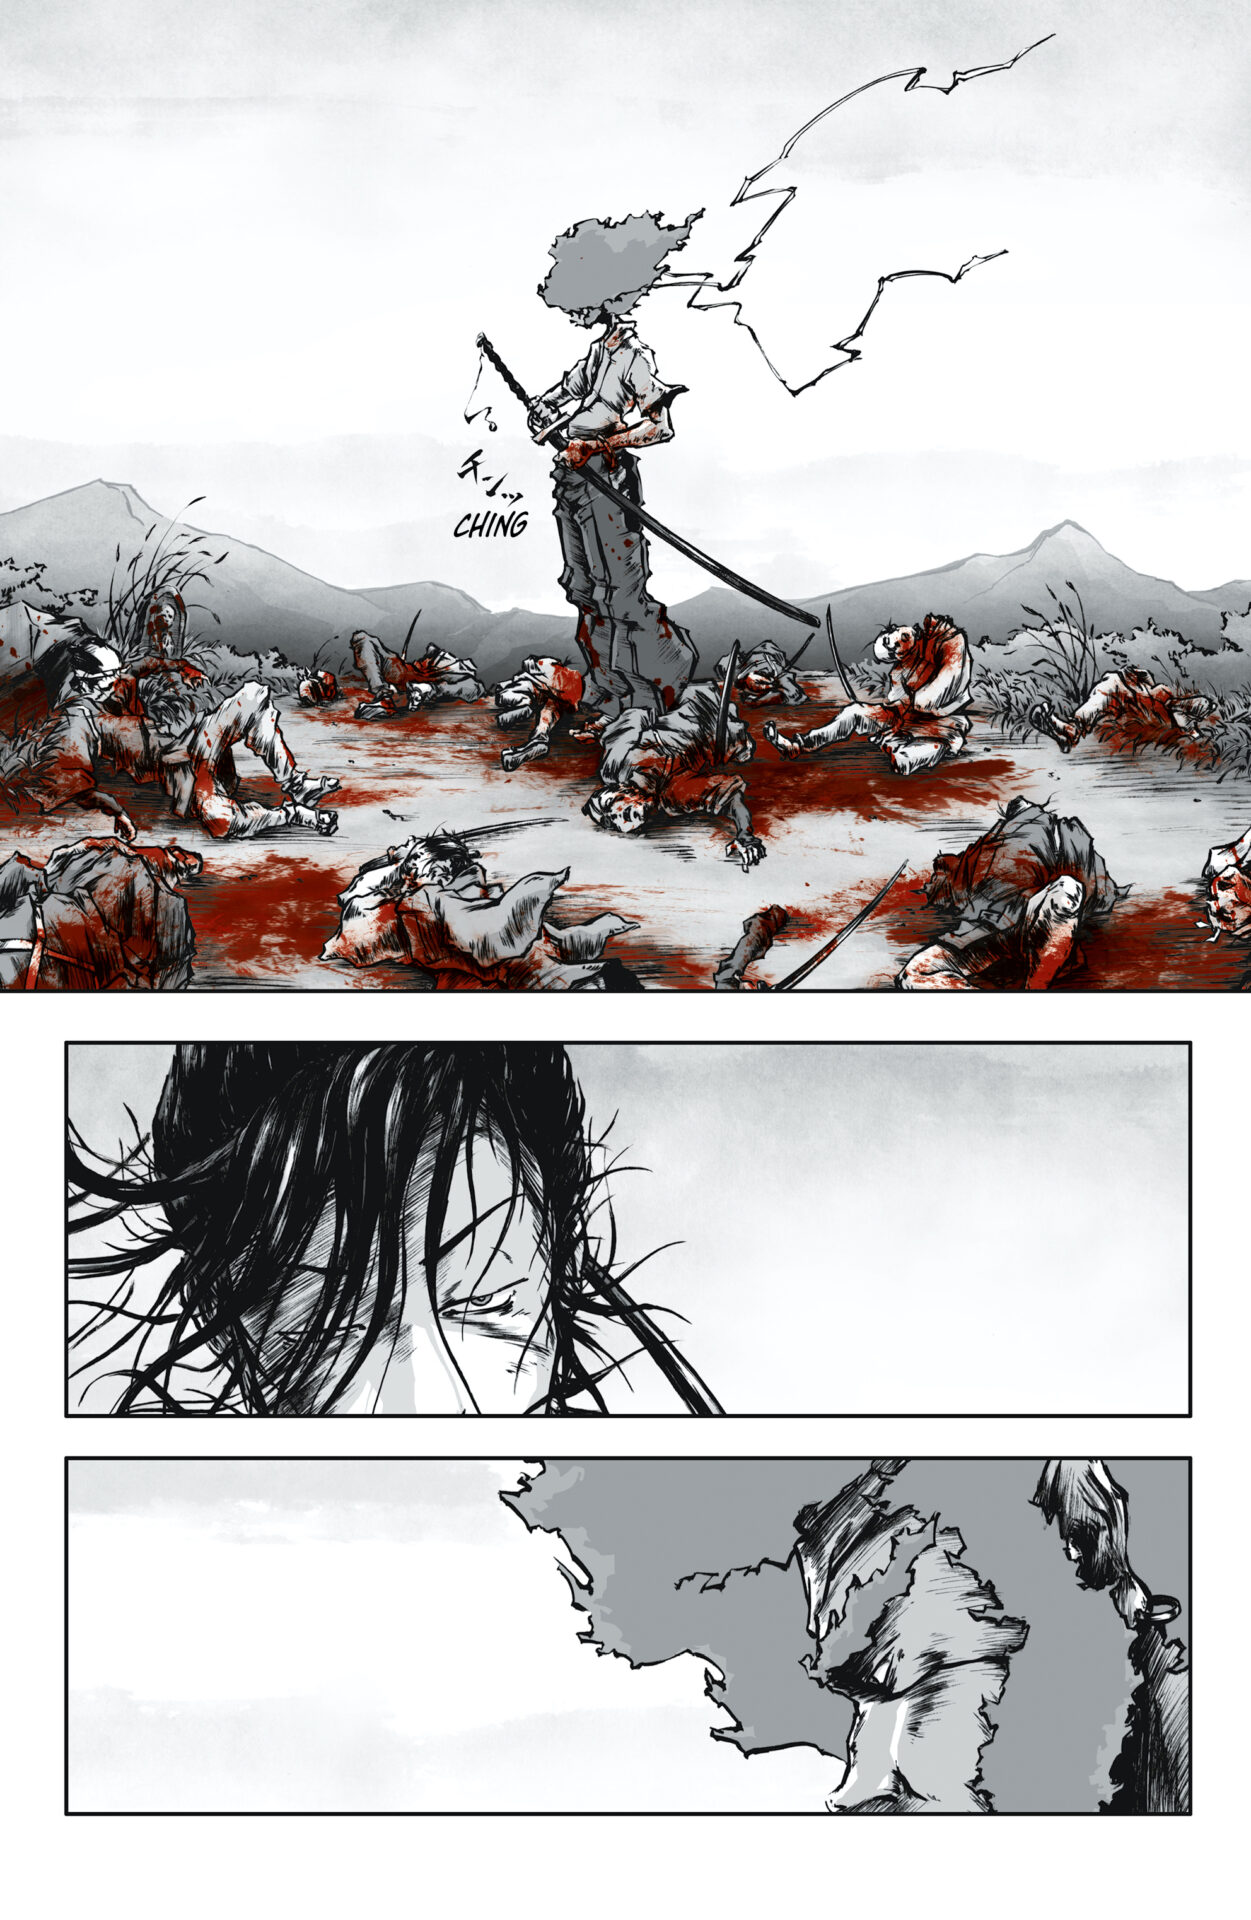 Afro Samurai Vol.2 (Graphic Novel) by Okazaki, Takashi